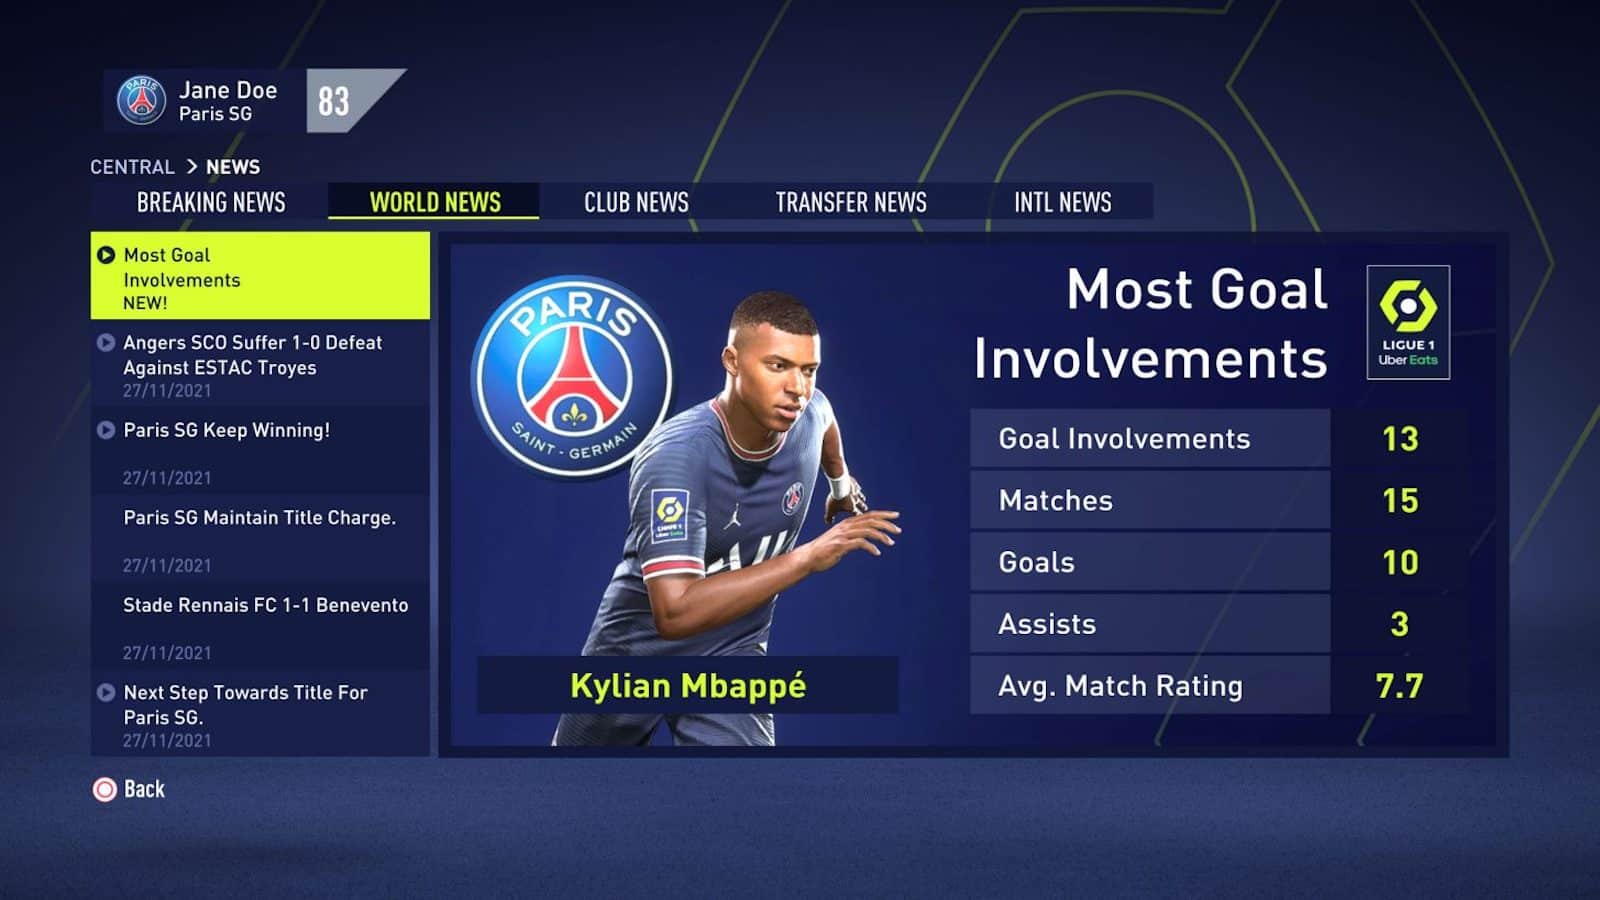 FIFA 22 Career Mode news screen showing Kylian Mbappe